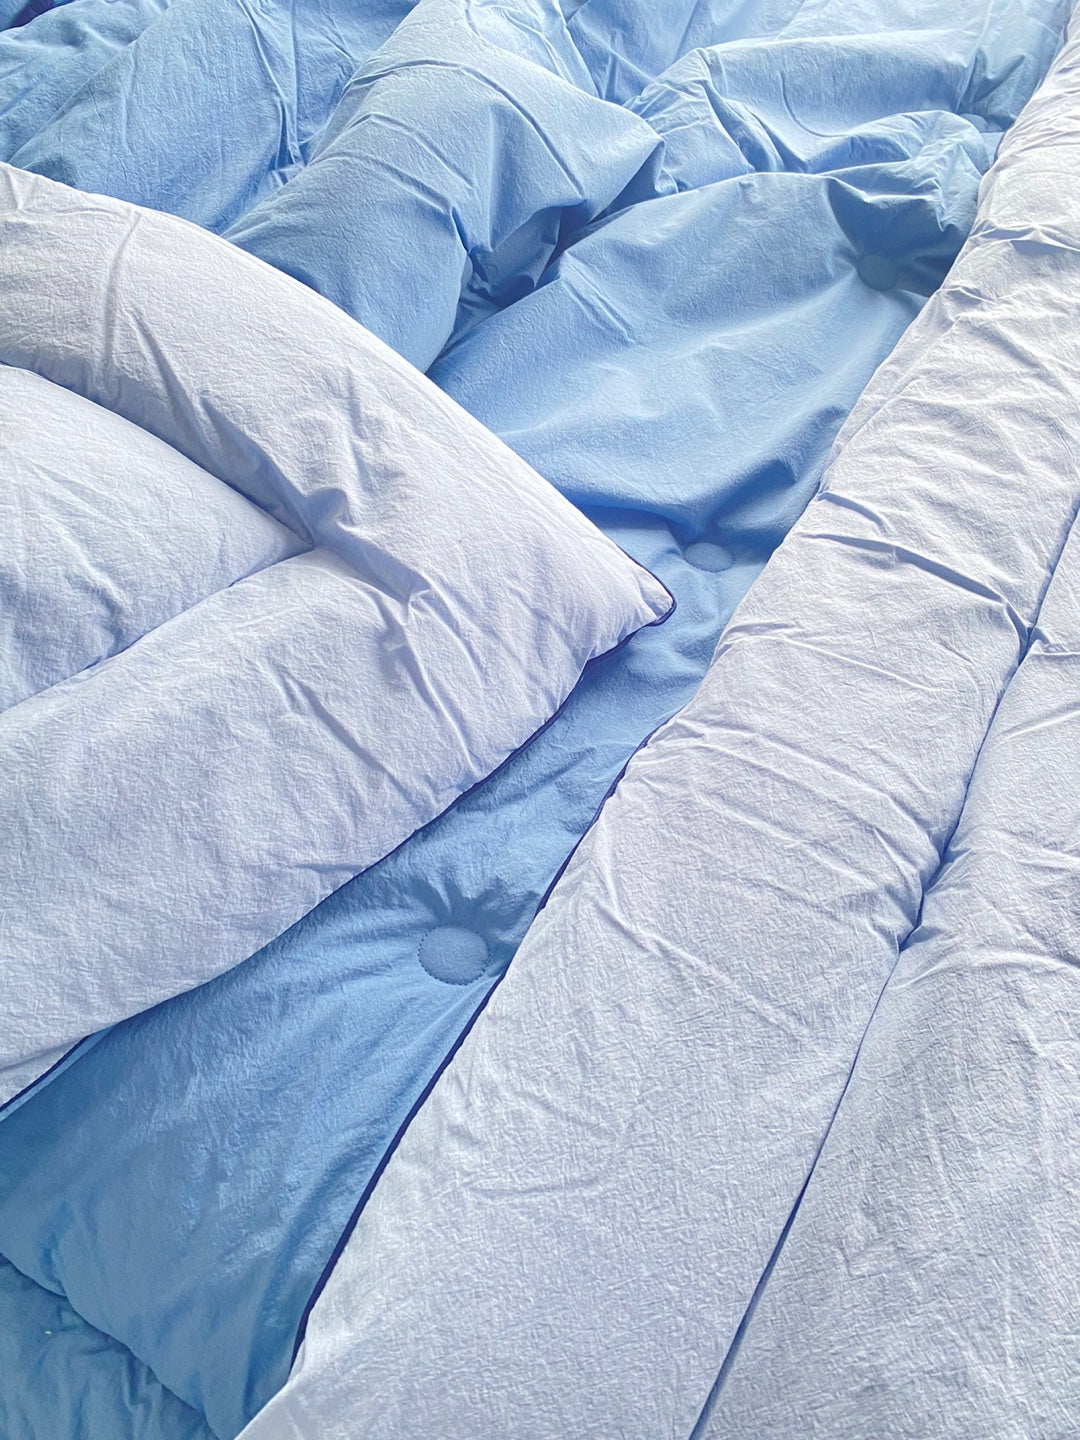 Premium 100% High Density Cotton bedding set_Blue